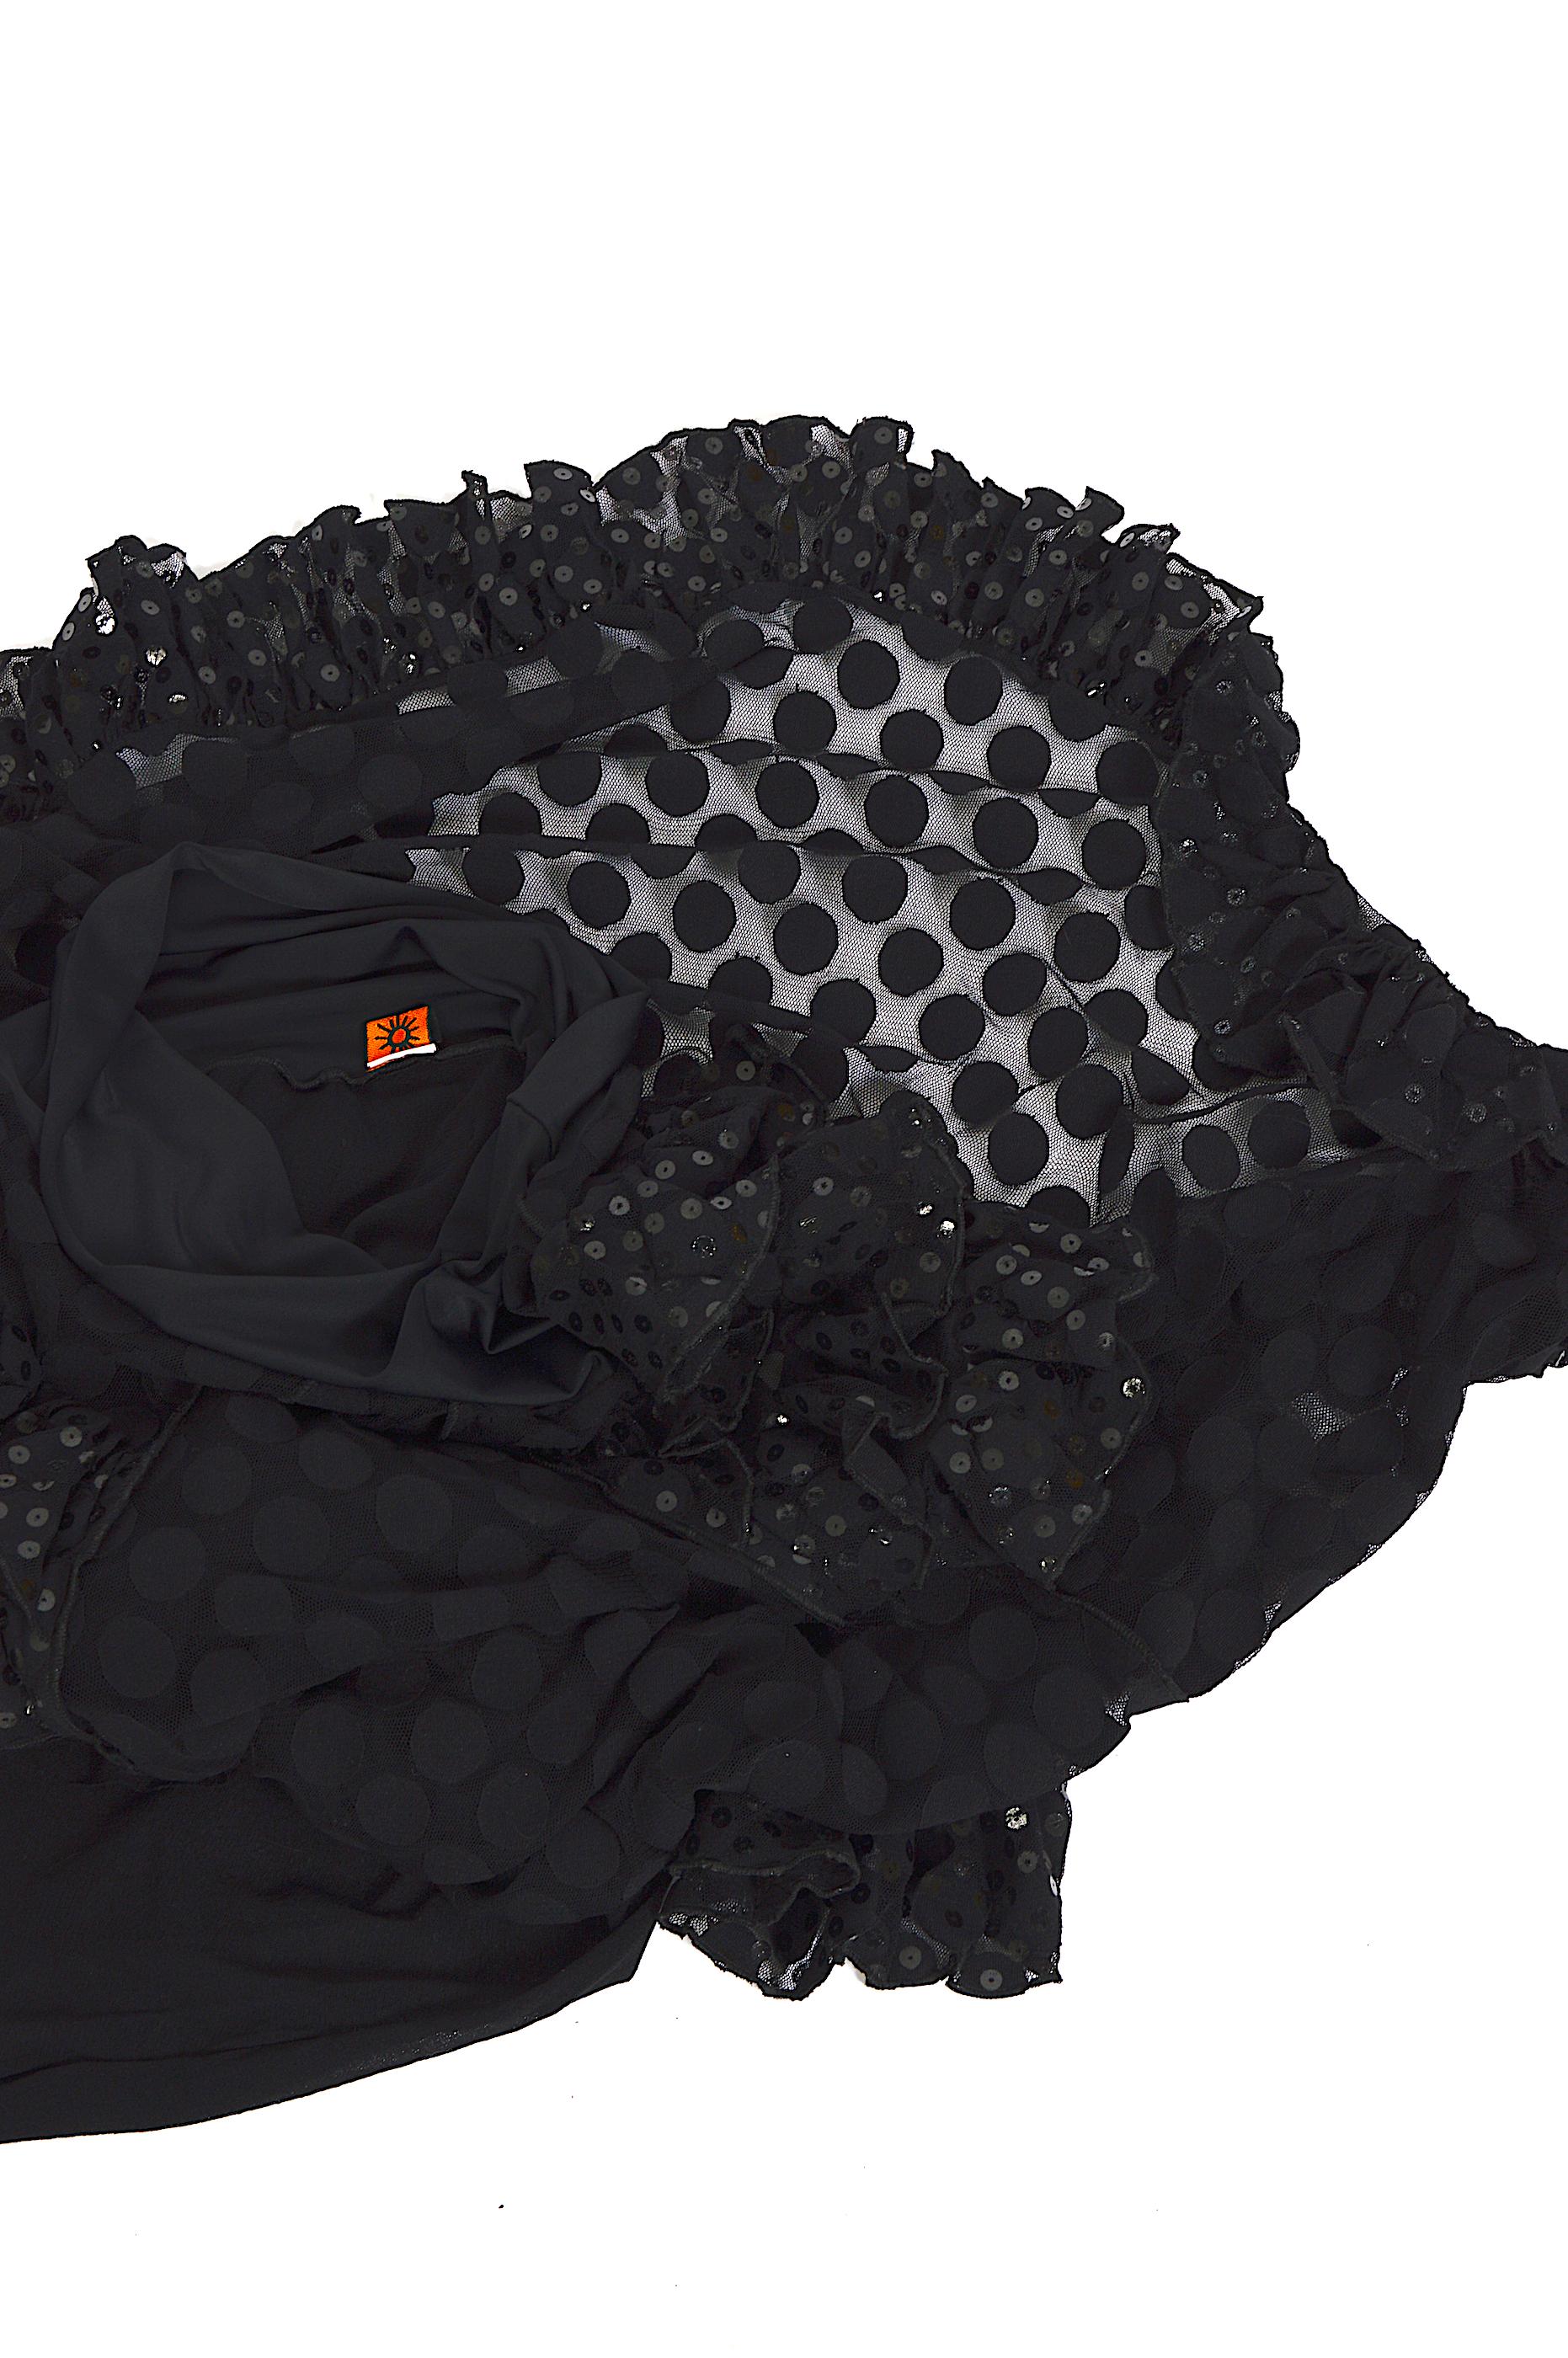 Jean Paul Gaultier soleil vintage SS 2005 black sequins & ruffles mesh skirt   For Sale 1